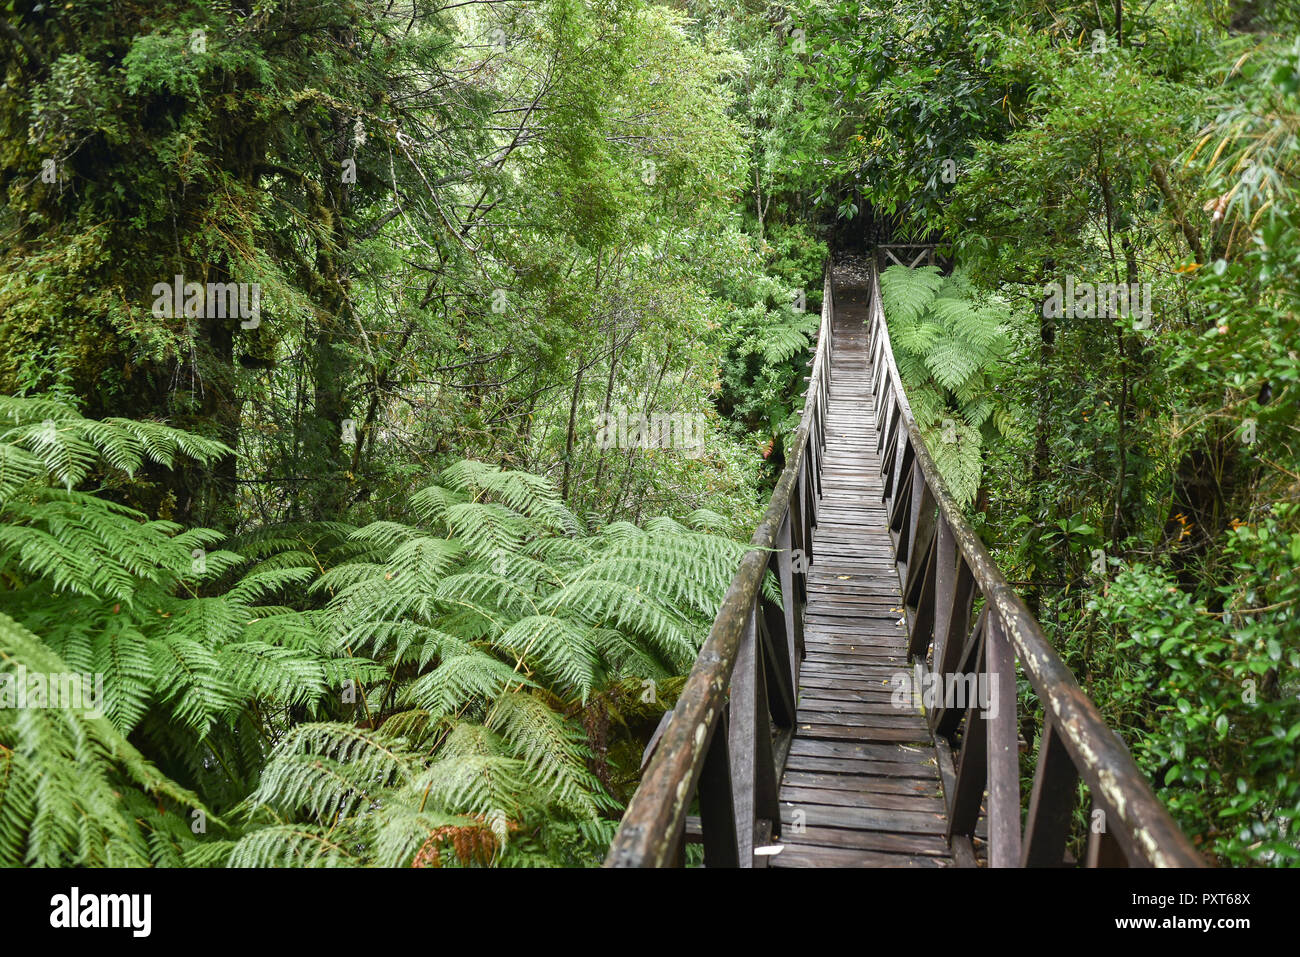 Ponte di legno attraverso le felci, foreste pluviali temperate, Carretera Austral, Parco Pumalín, Chaitén, Región de los Lagos, Patagonia Foto Stock